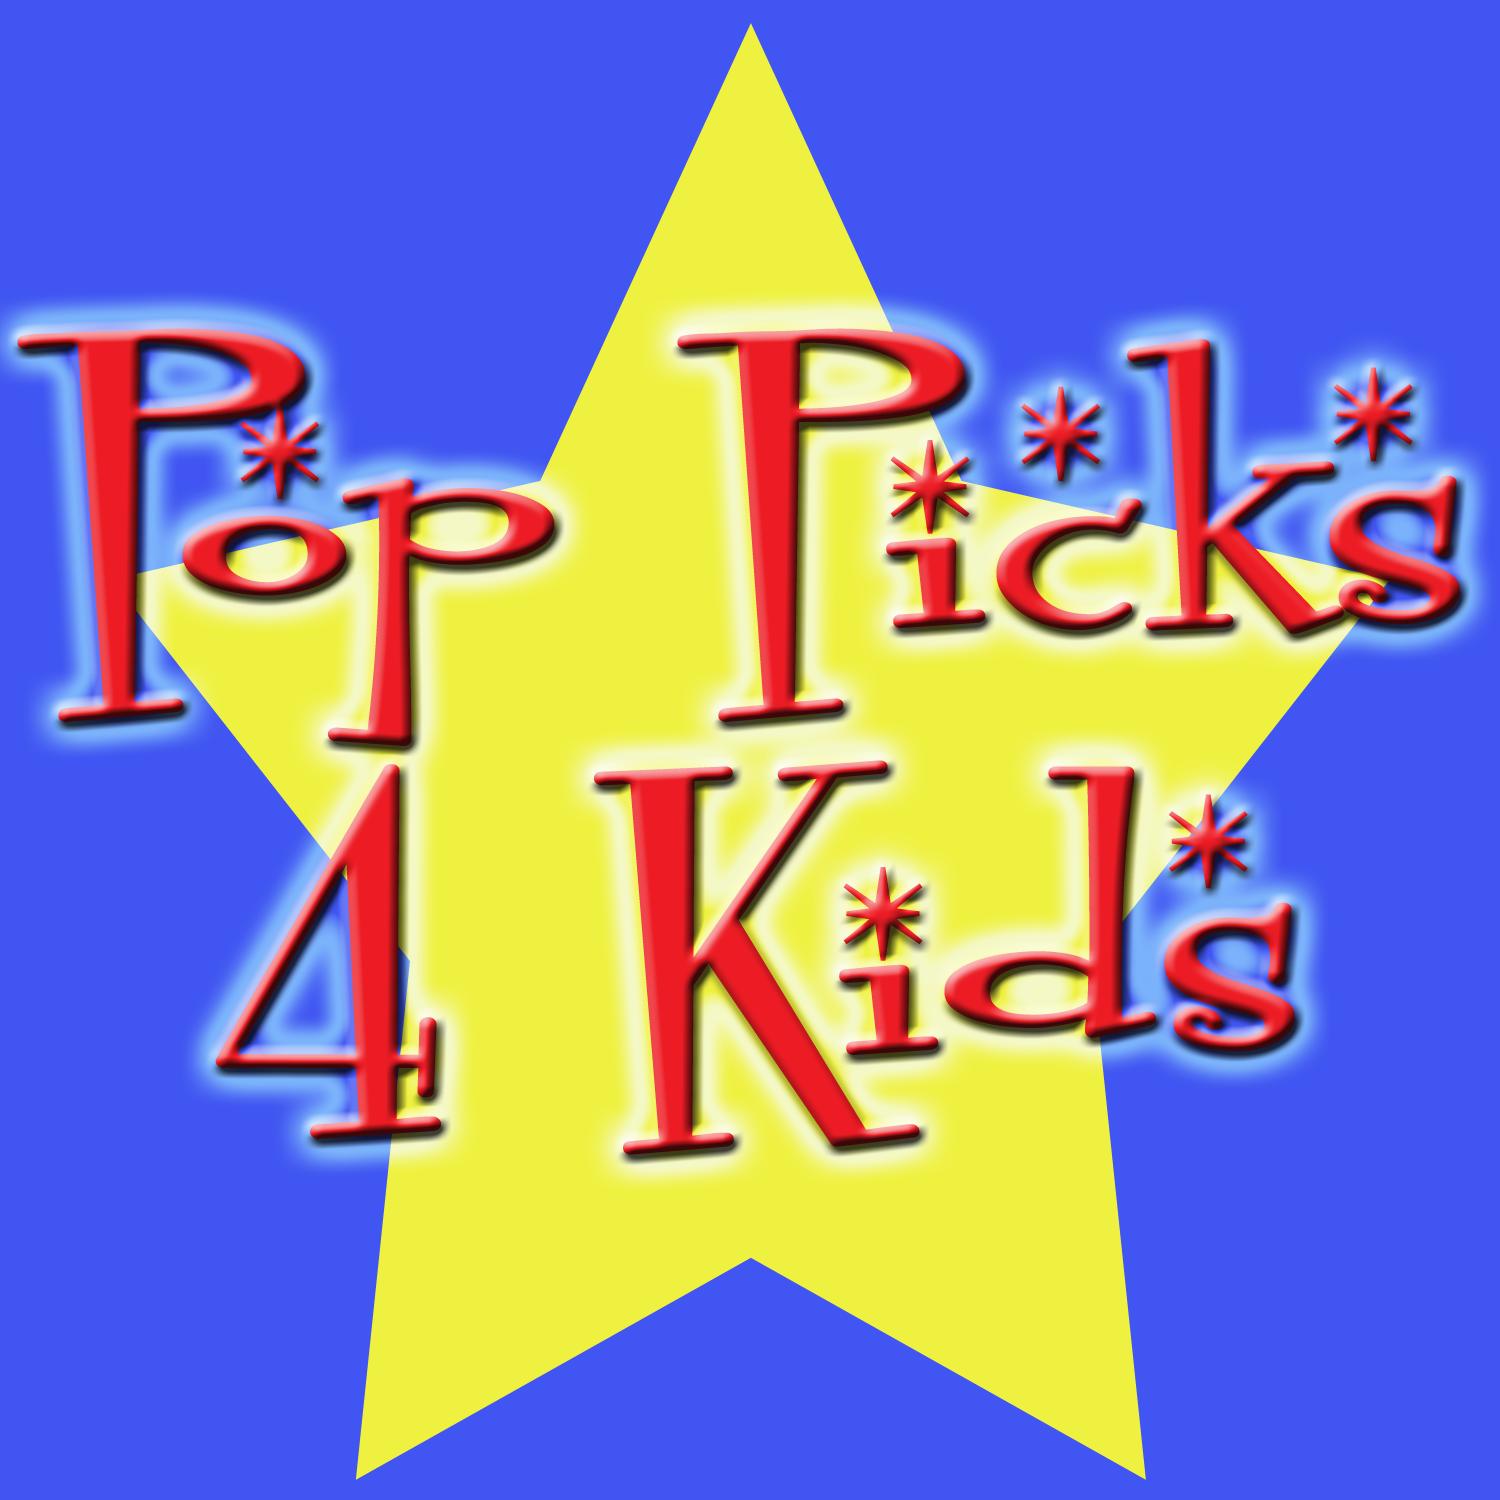 Pop Picks 4 Kids